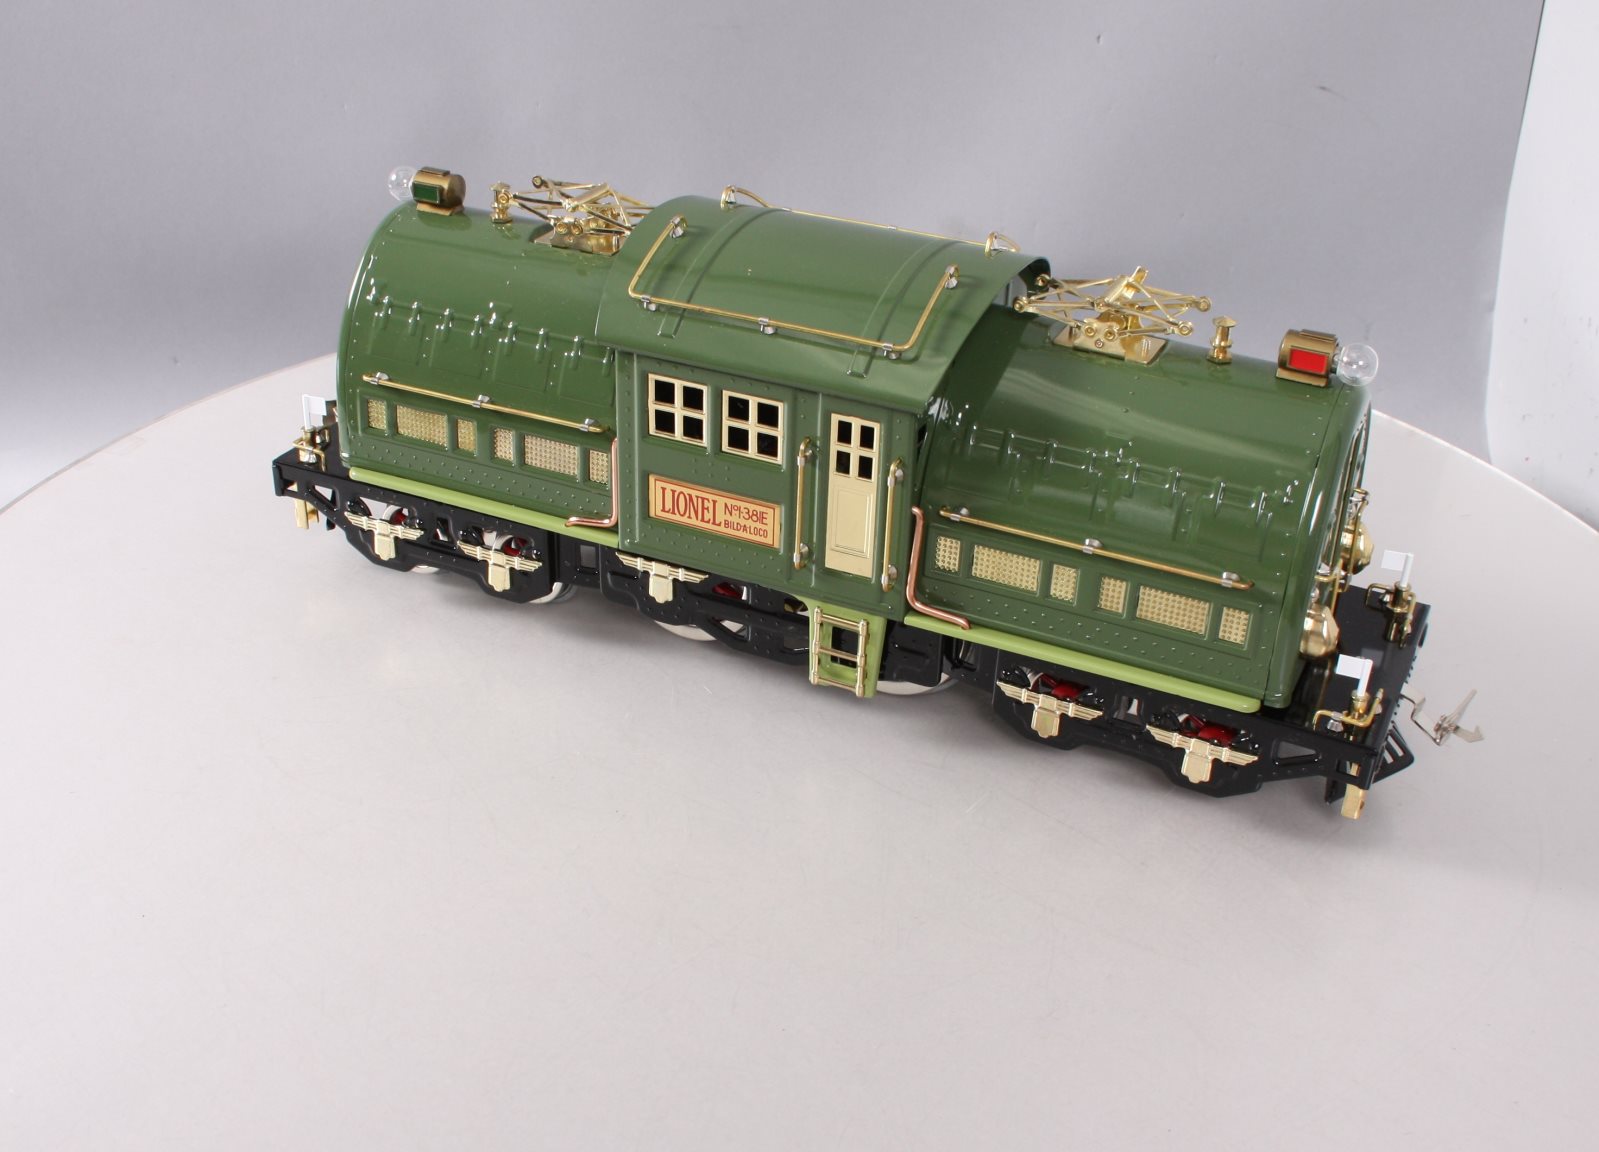 Lionel 6-13102 Standard Gauge I-381E 4-4-4 Two Tone Green Electric Locomotive